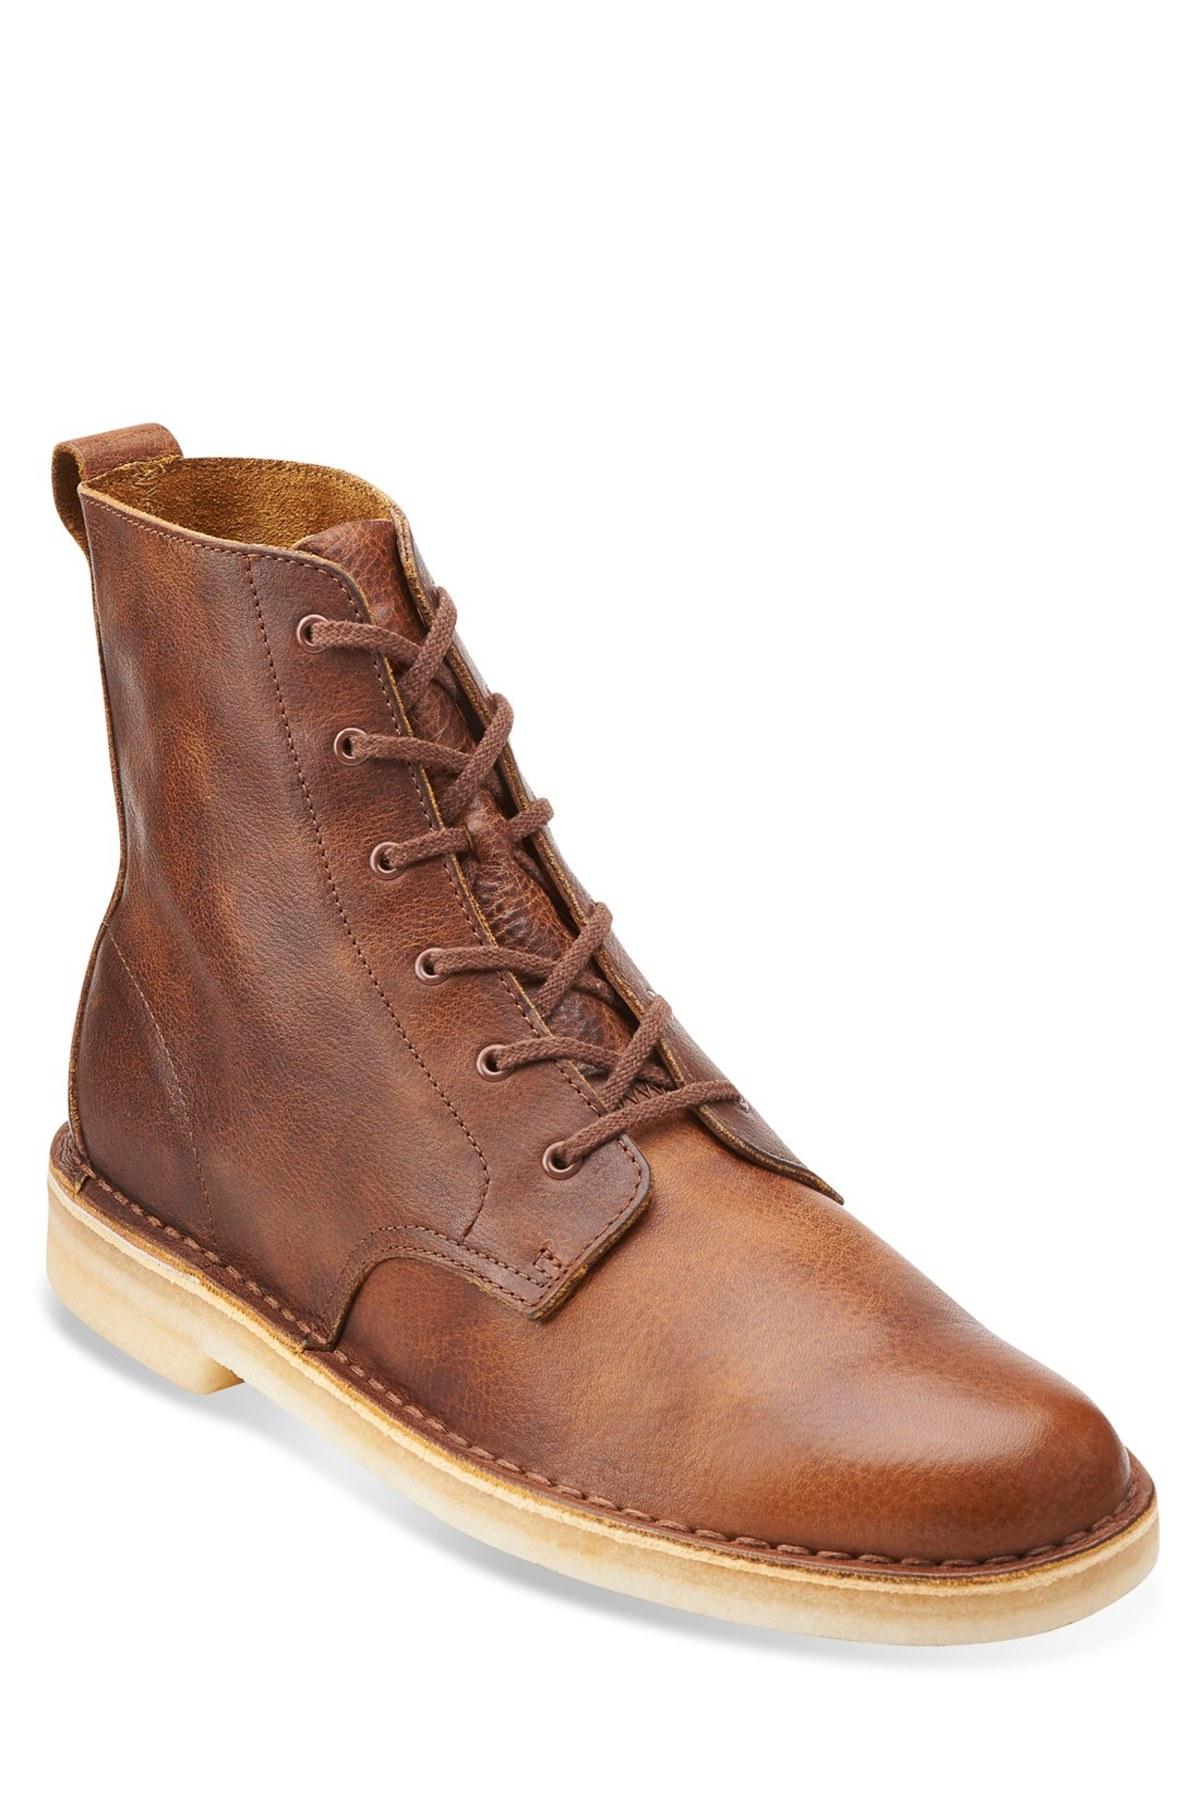 Clarks Leather Desert Mali Boot in (Brown) for Men - Lyst